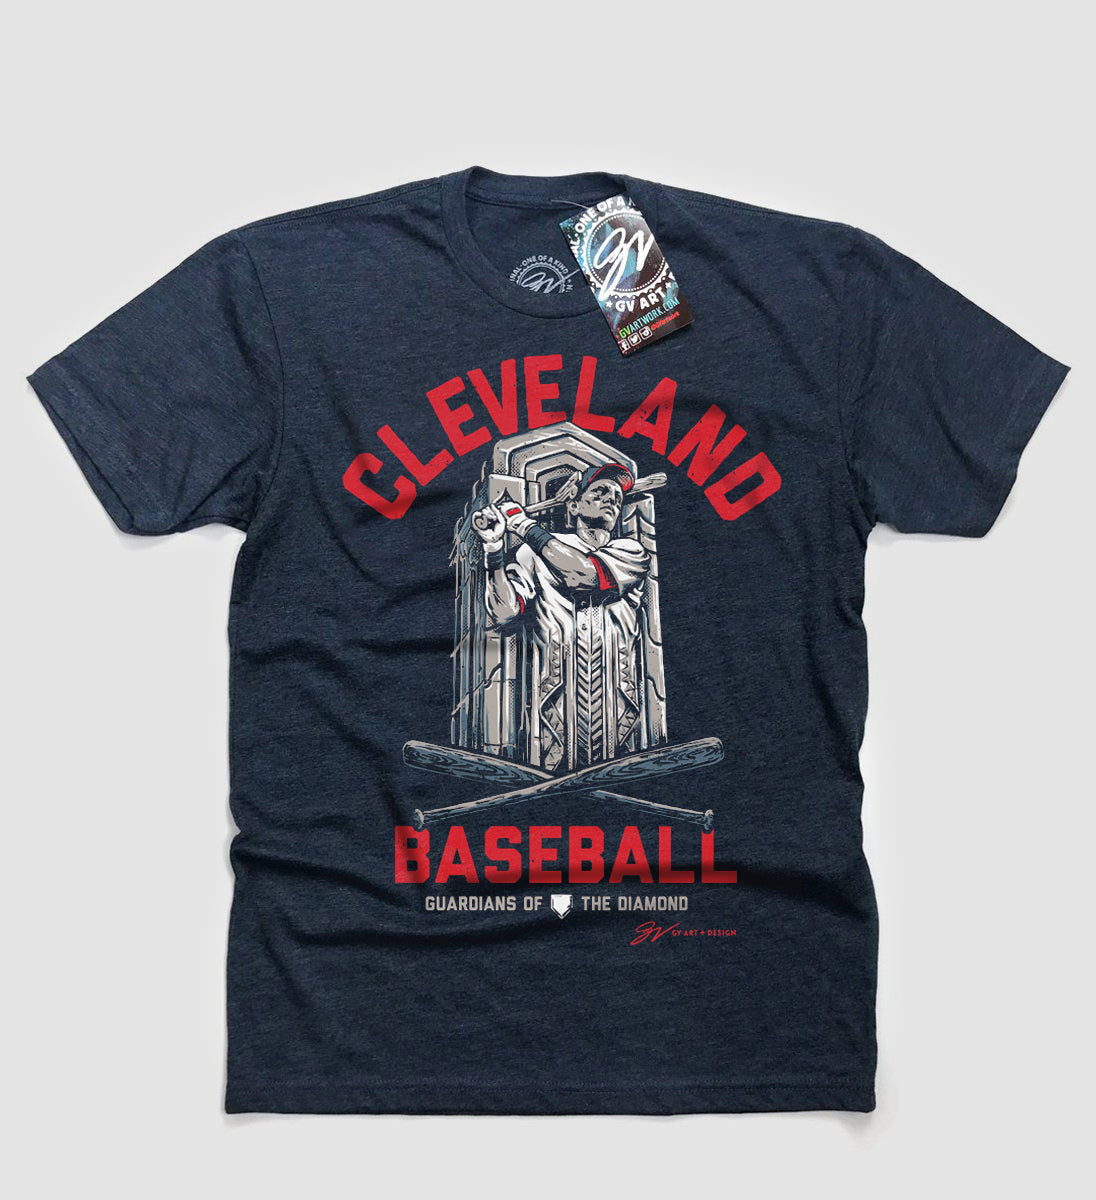 Cleveland baseball gear